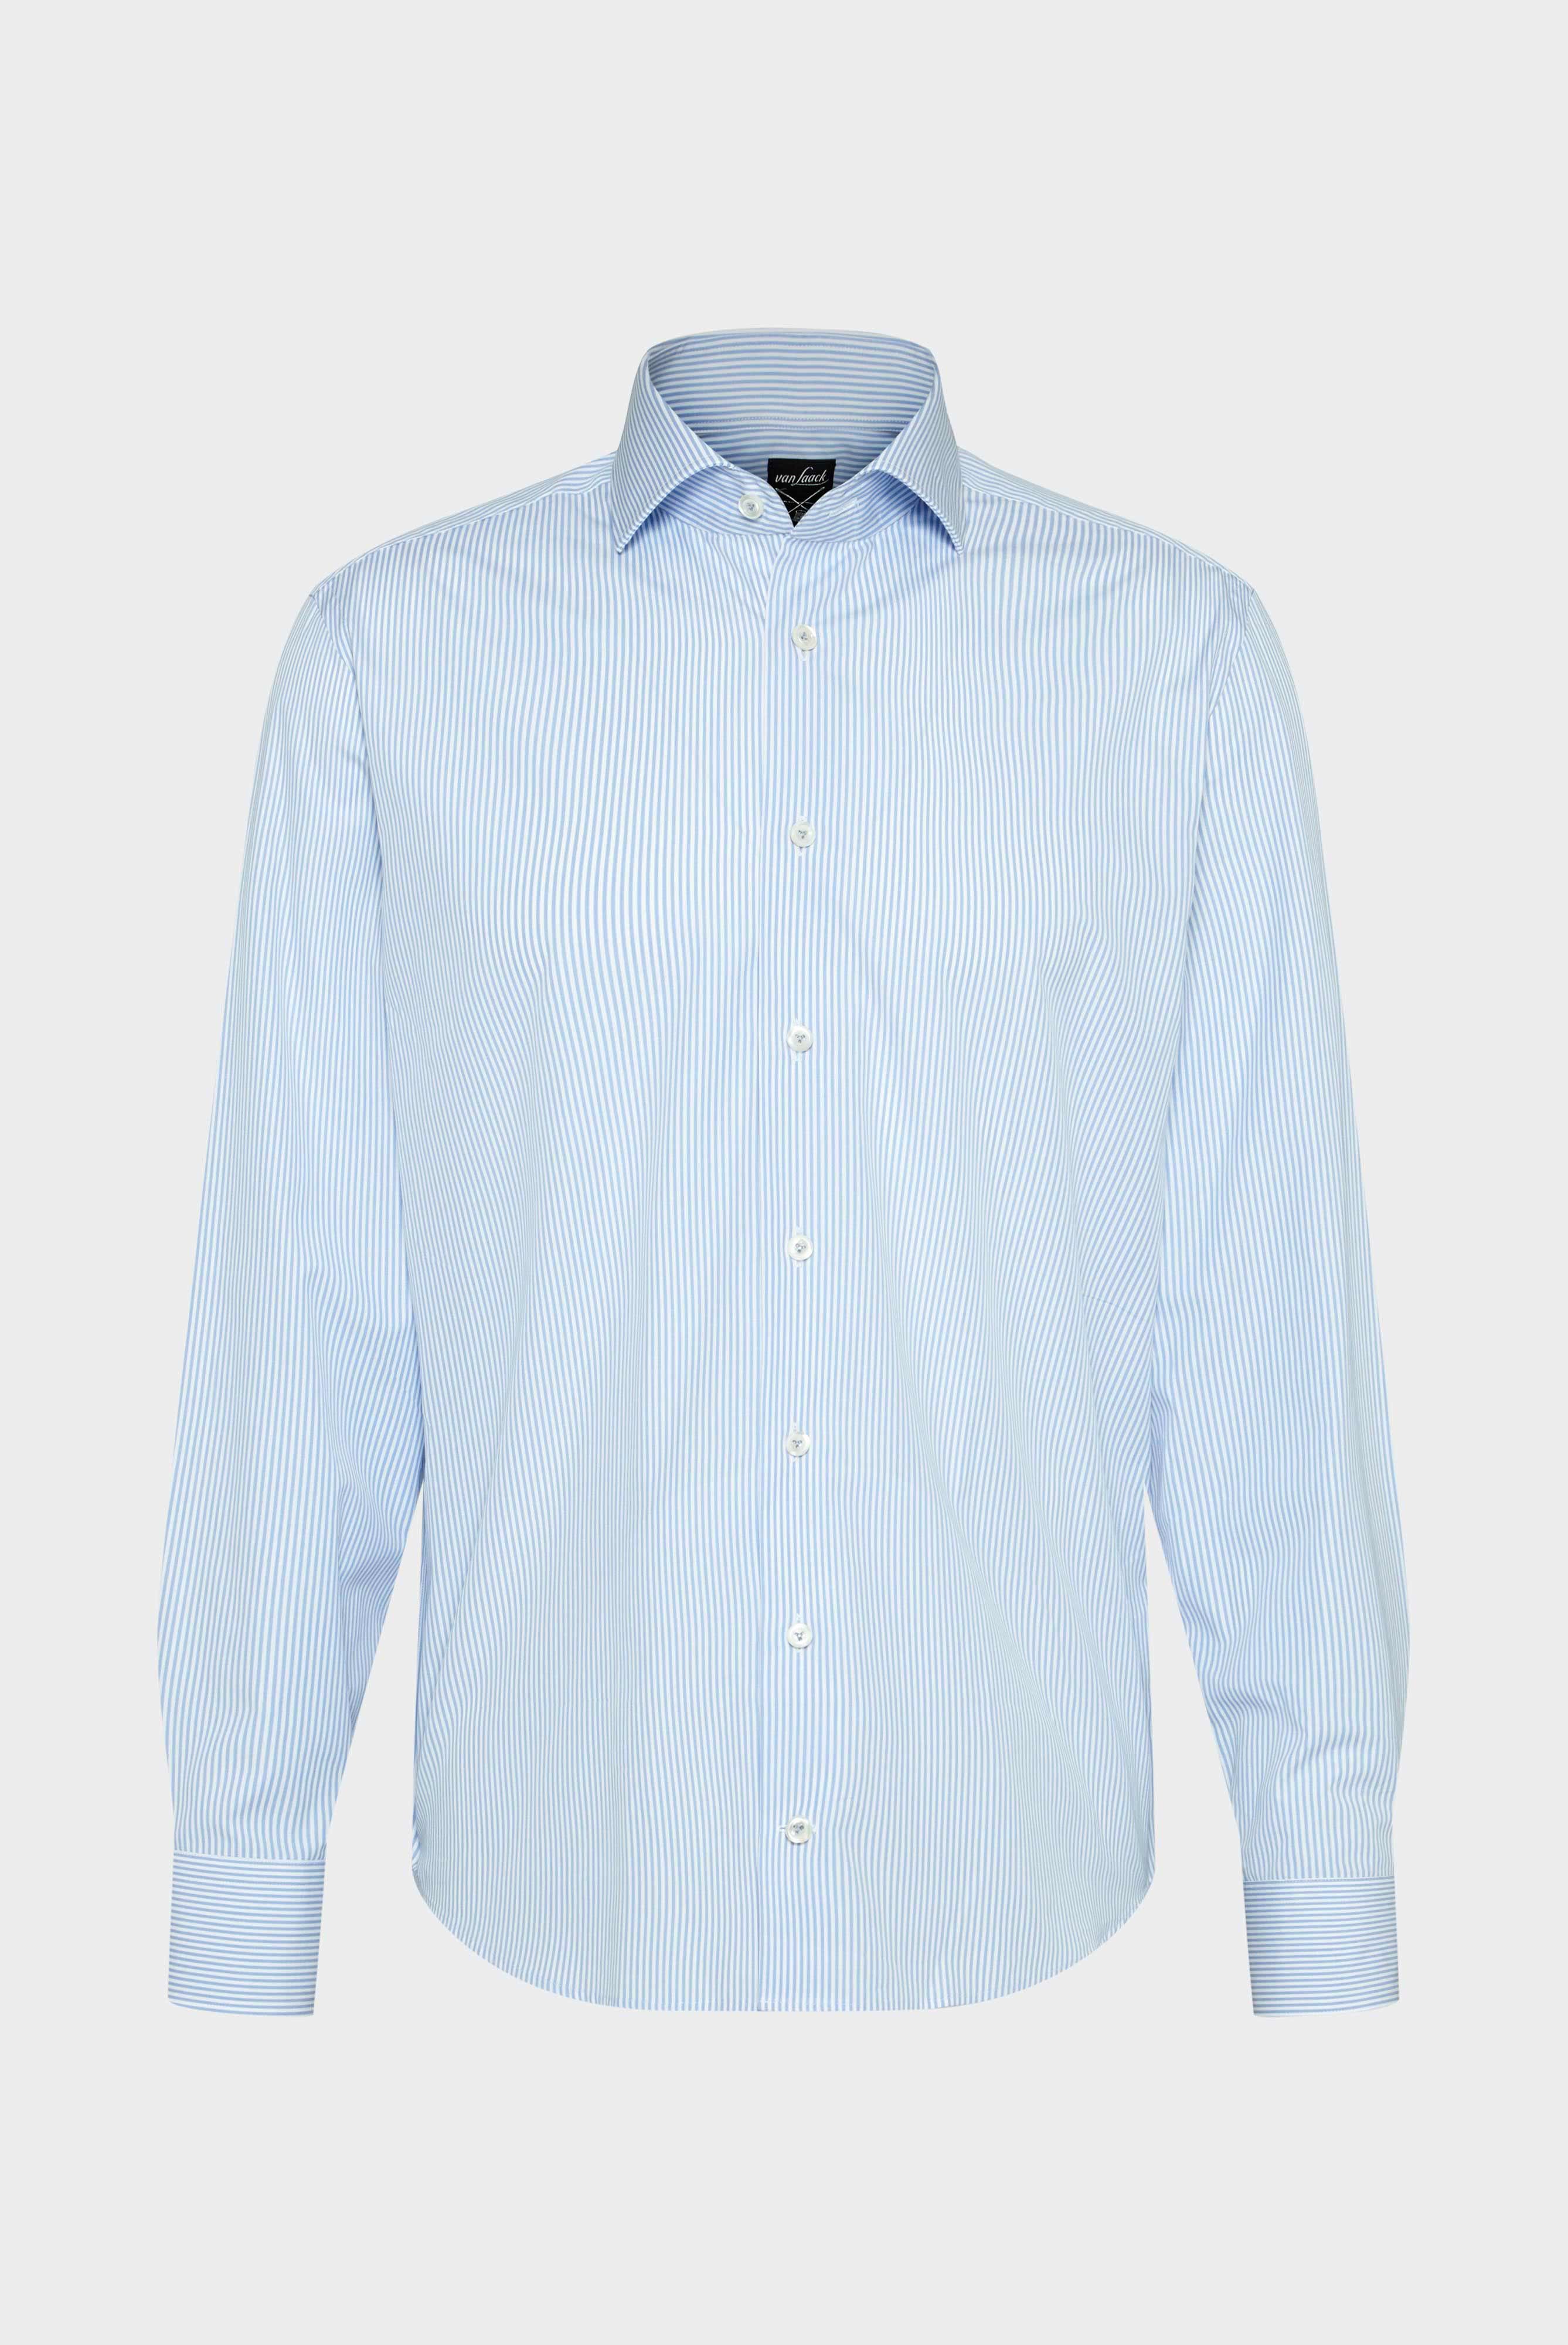 Bügelleichte Hemden+Bügelfreies Popeline Hemd Tailor Fit+20.2020.AV.141786.720.37